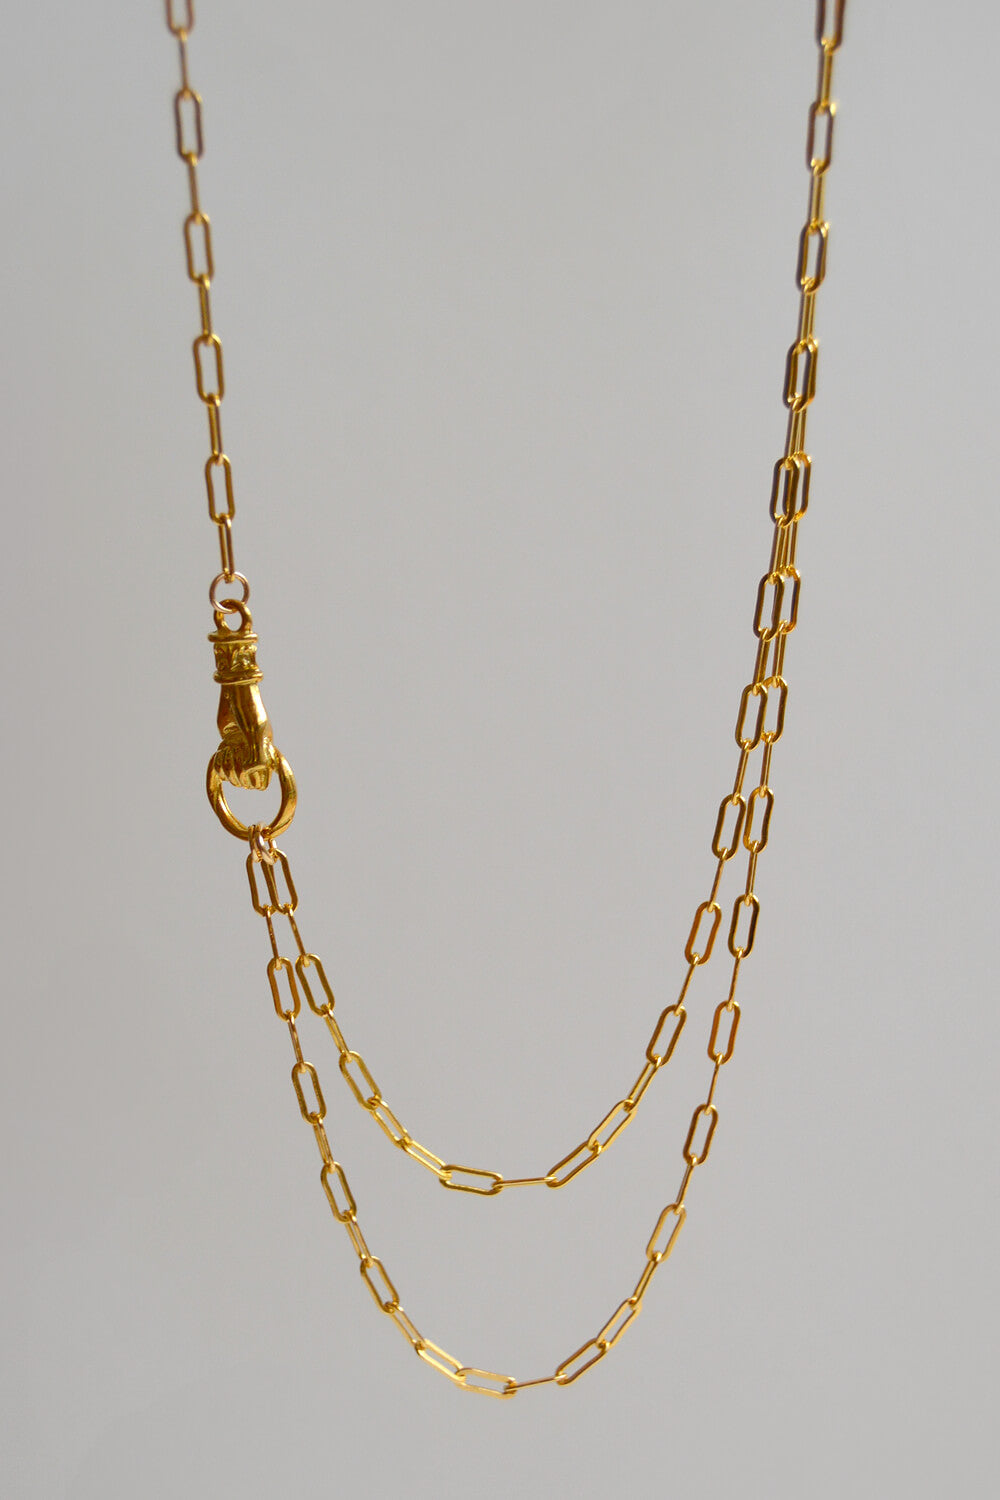 keepsake necklace - gold